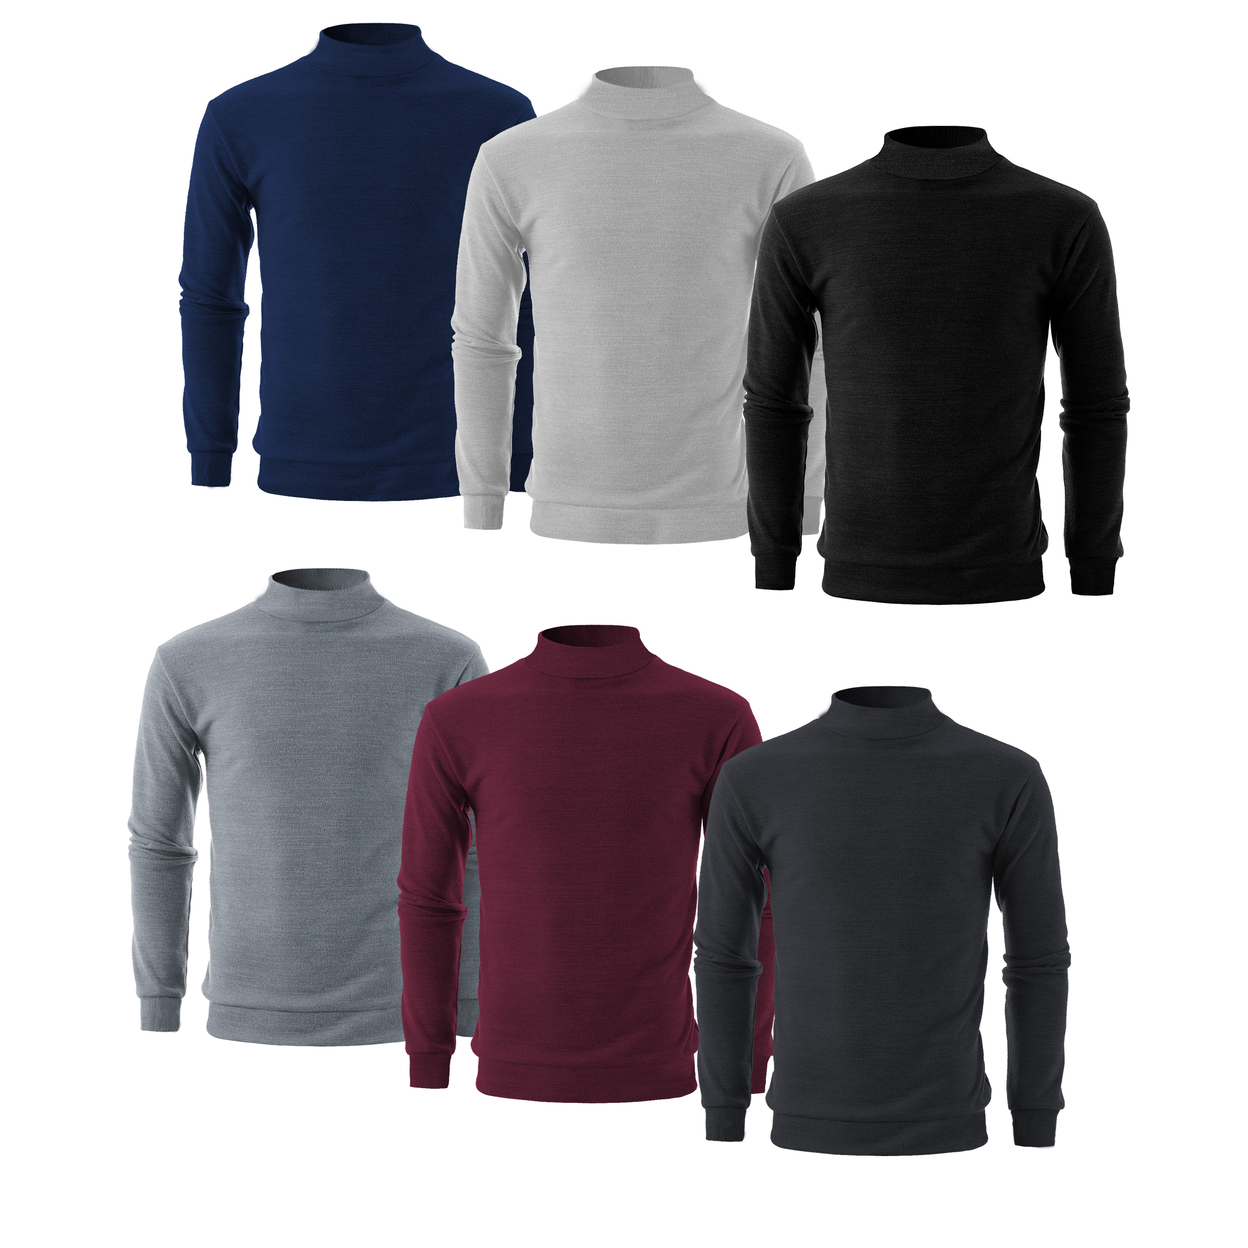 Men's Winter Warm Cozy Knit Slim-Fit Mock Neck Sweater - Grey, Medium